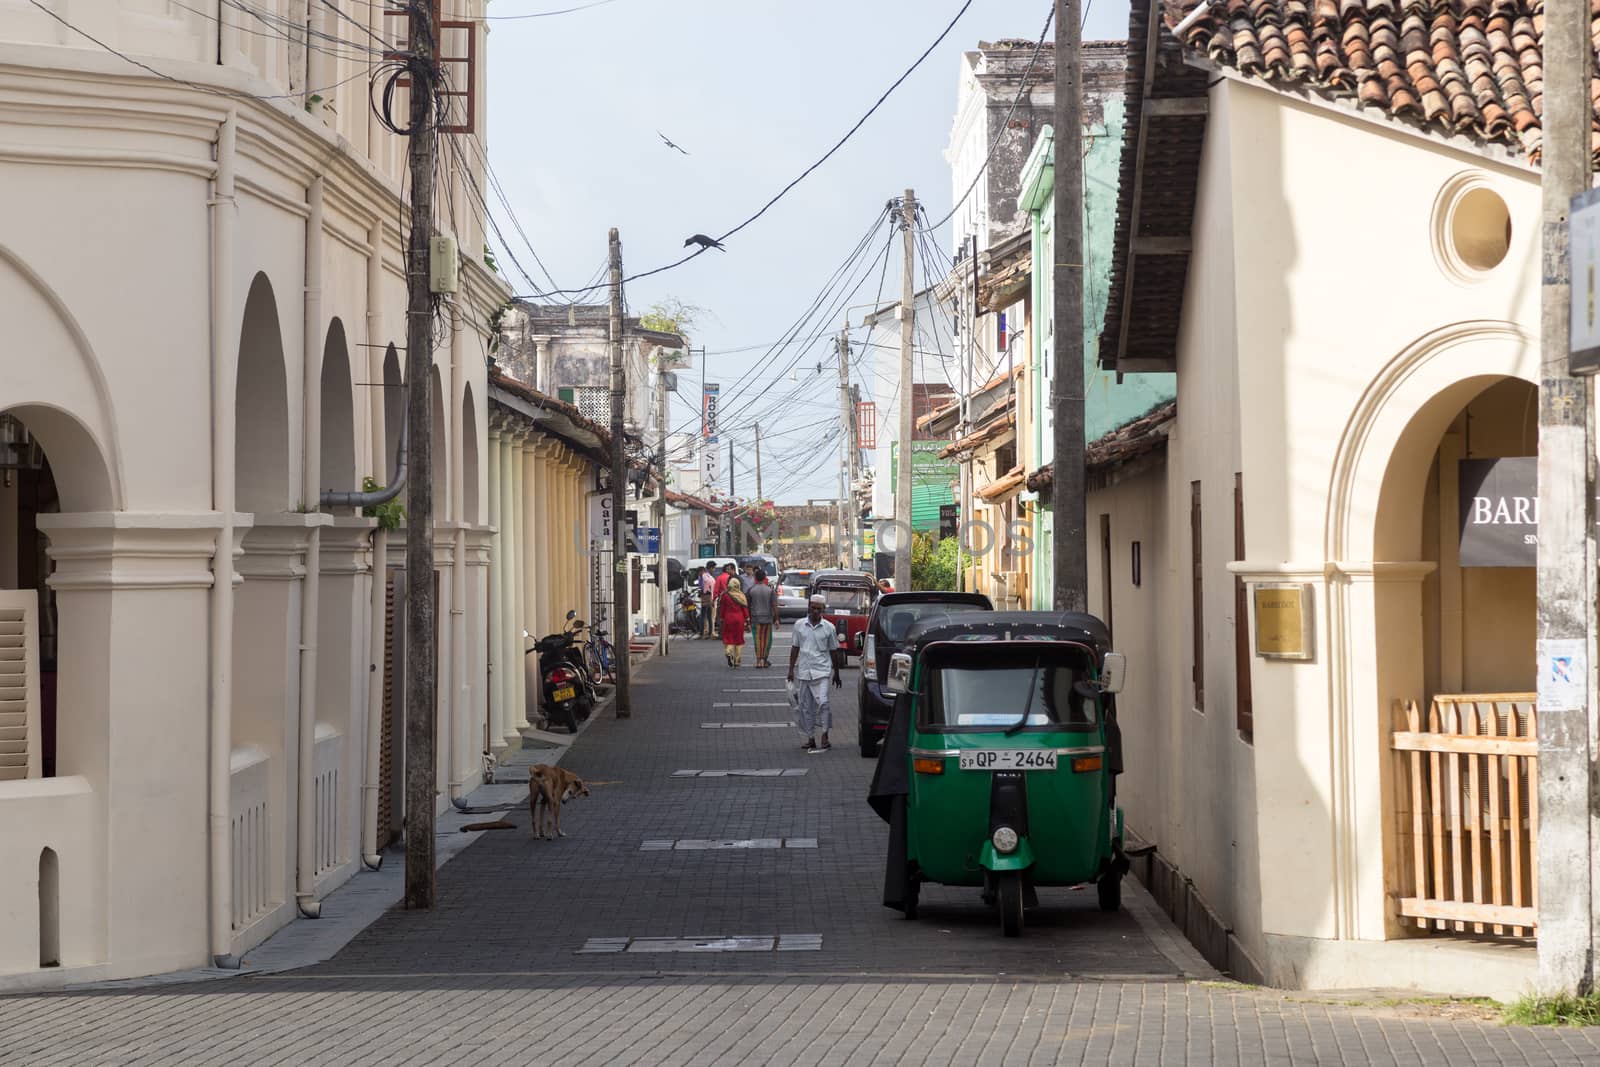 Small street in Galle Fort, Sri Lanka by oliverfoerstner